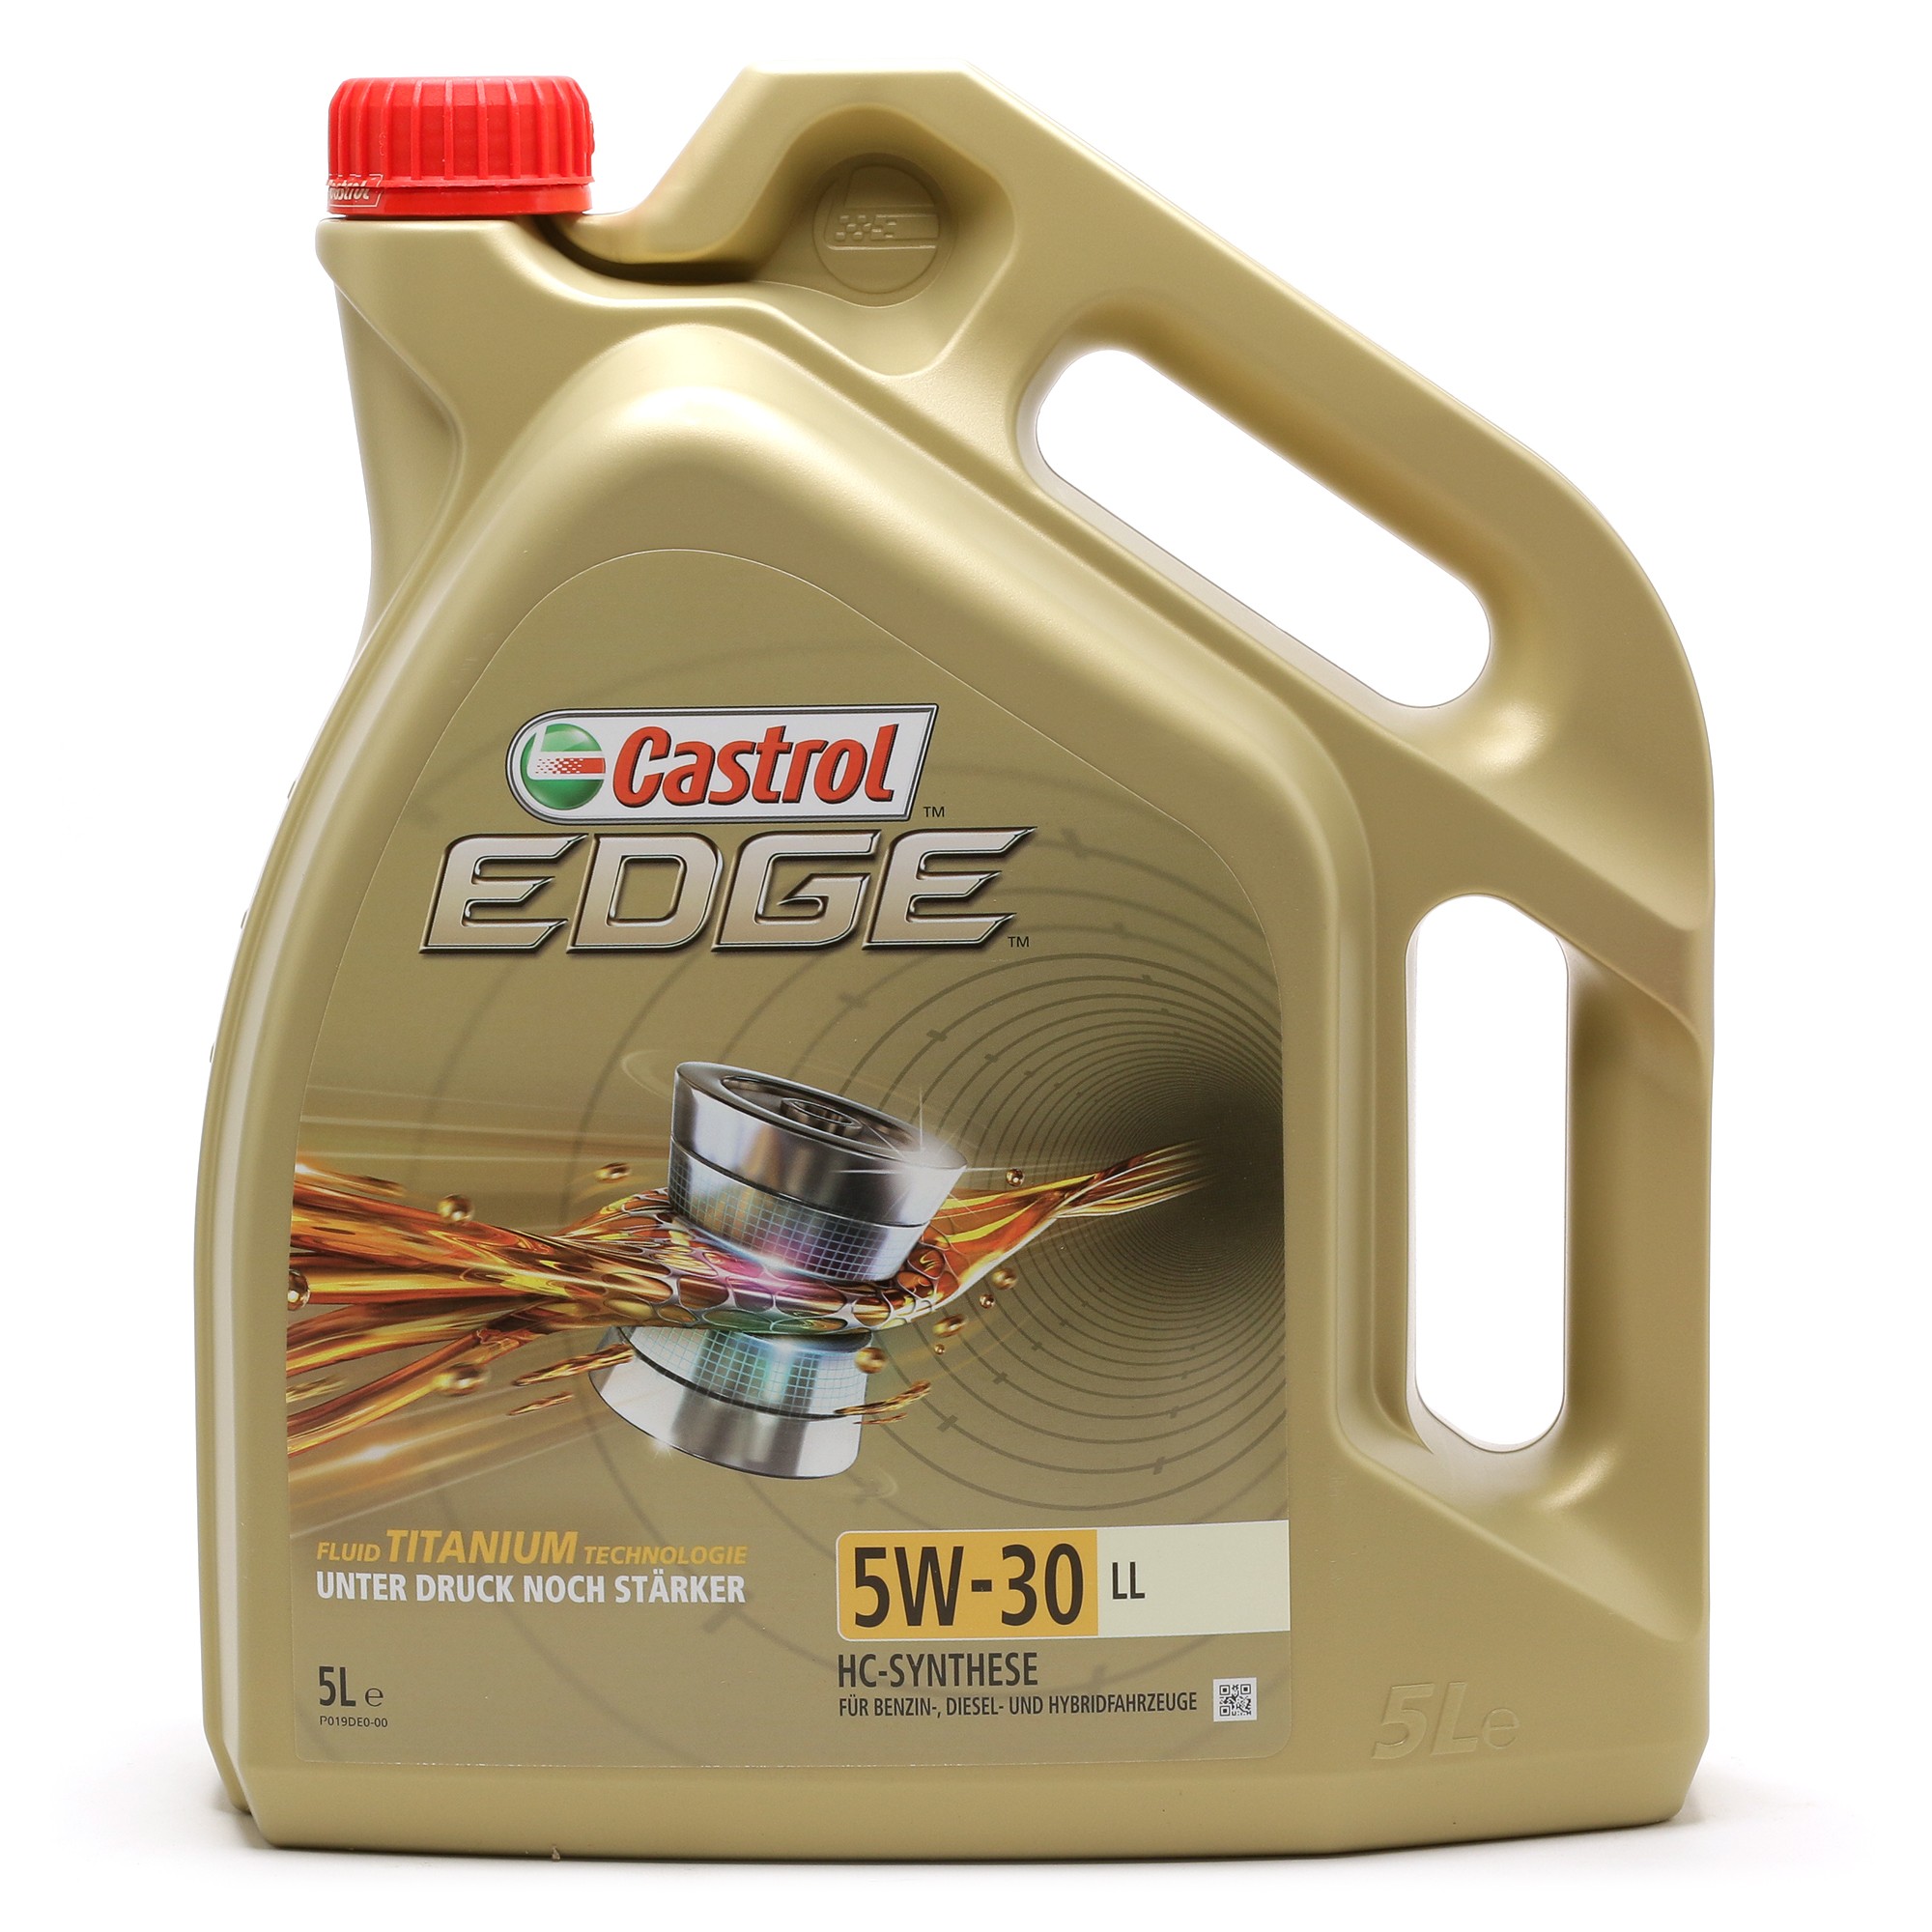 Castrol EDGE Fluid Titanium 5W-30 LL desde 12,67 €